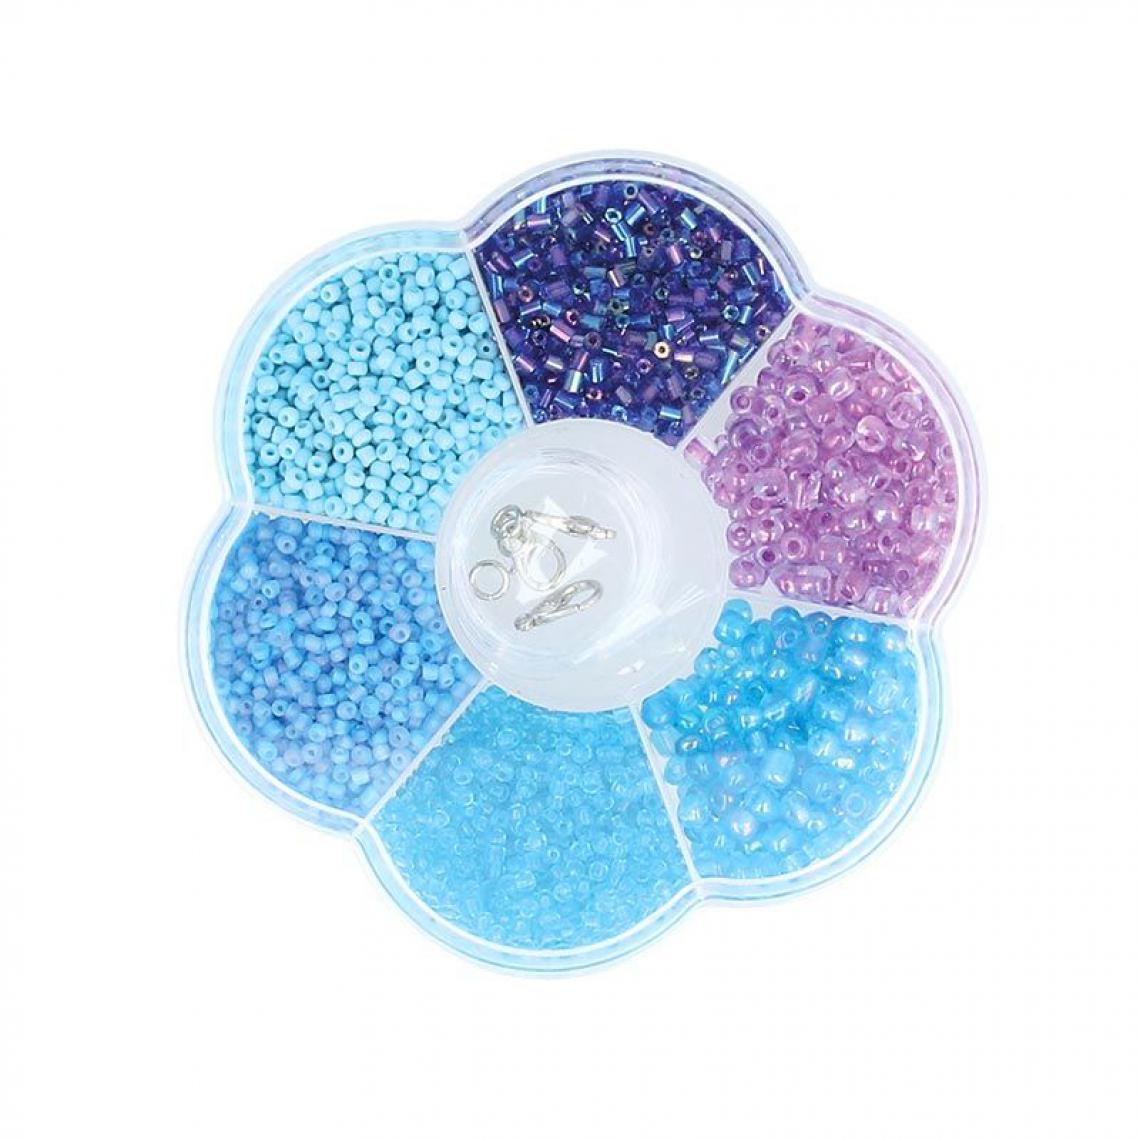 Artemio - Assortiment de perles en plastique bleu - 130 g - Perles